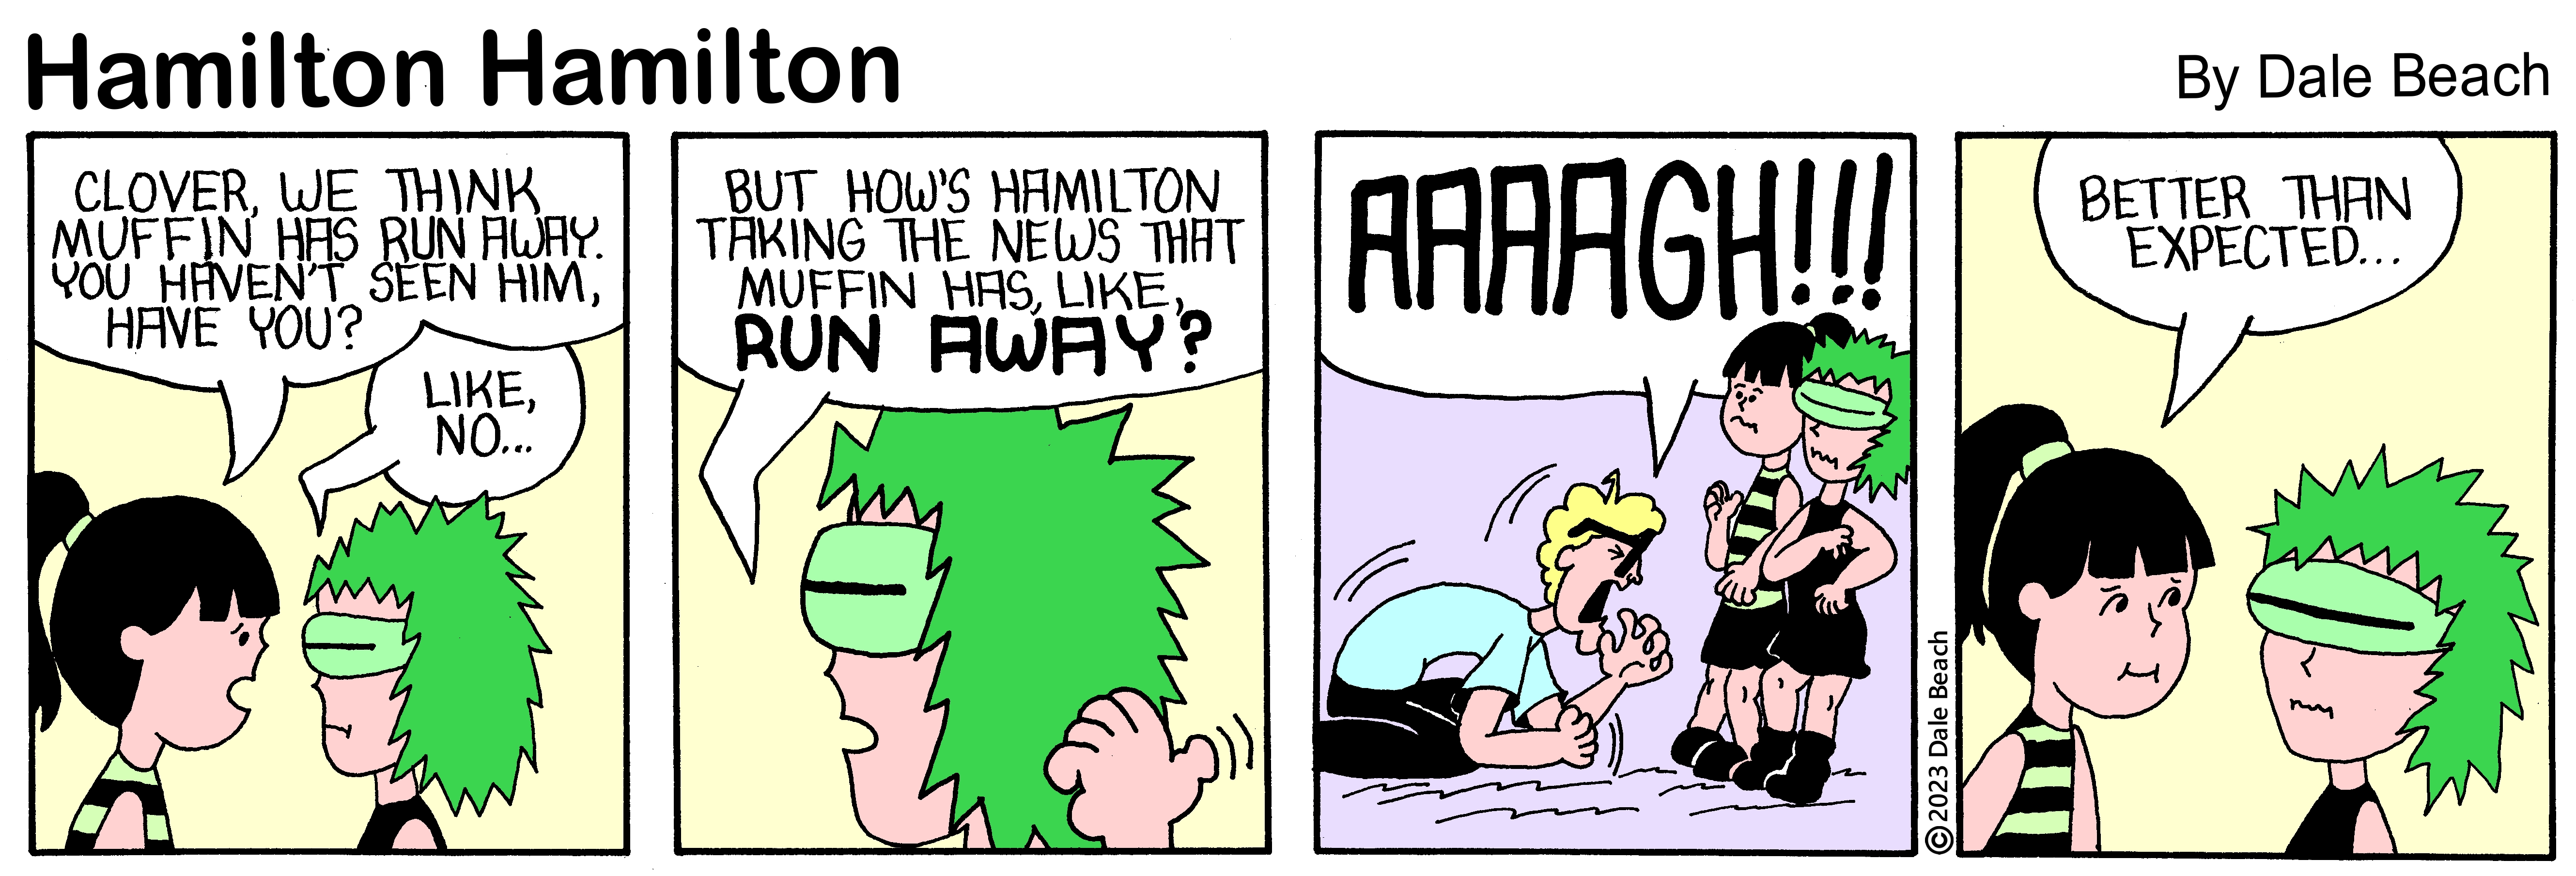 Hamilton Hamilton cartoon strip